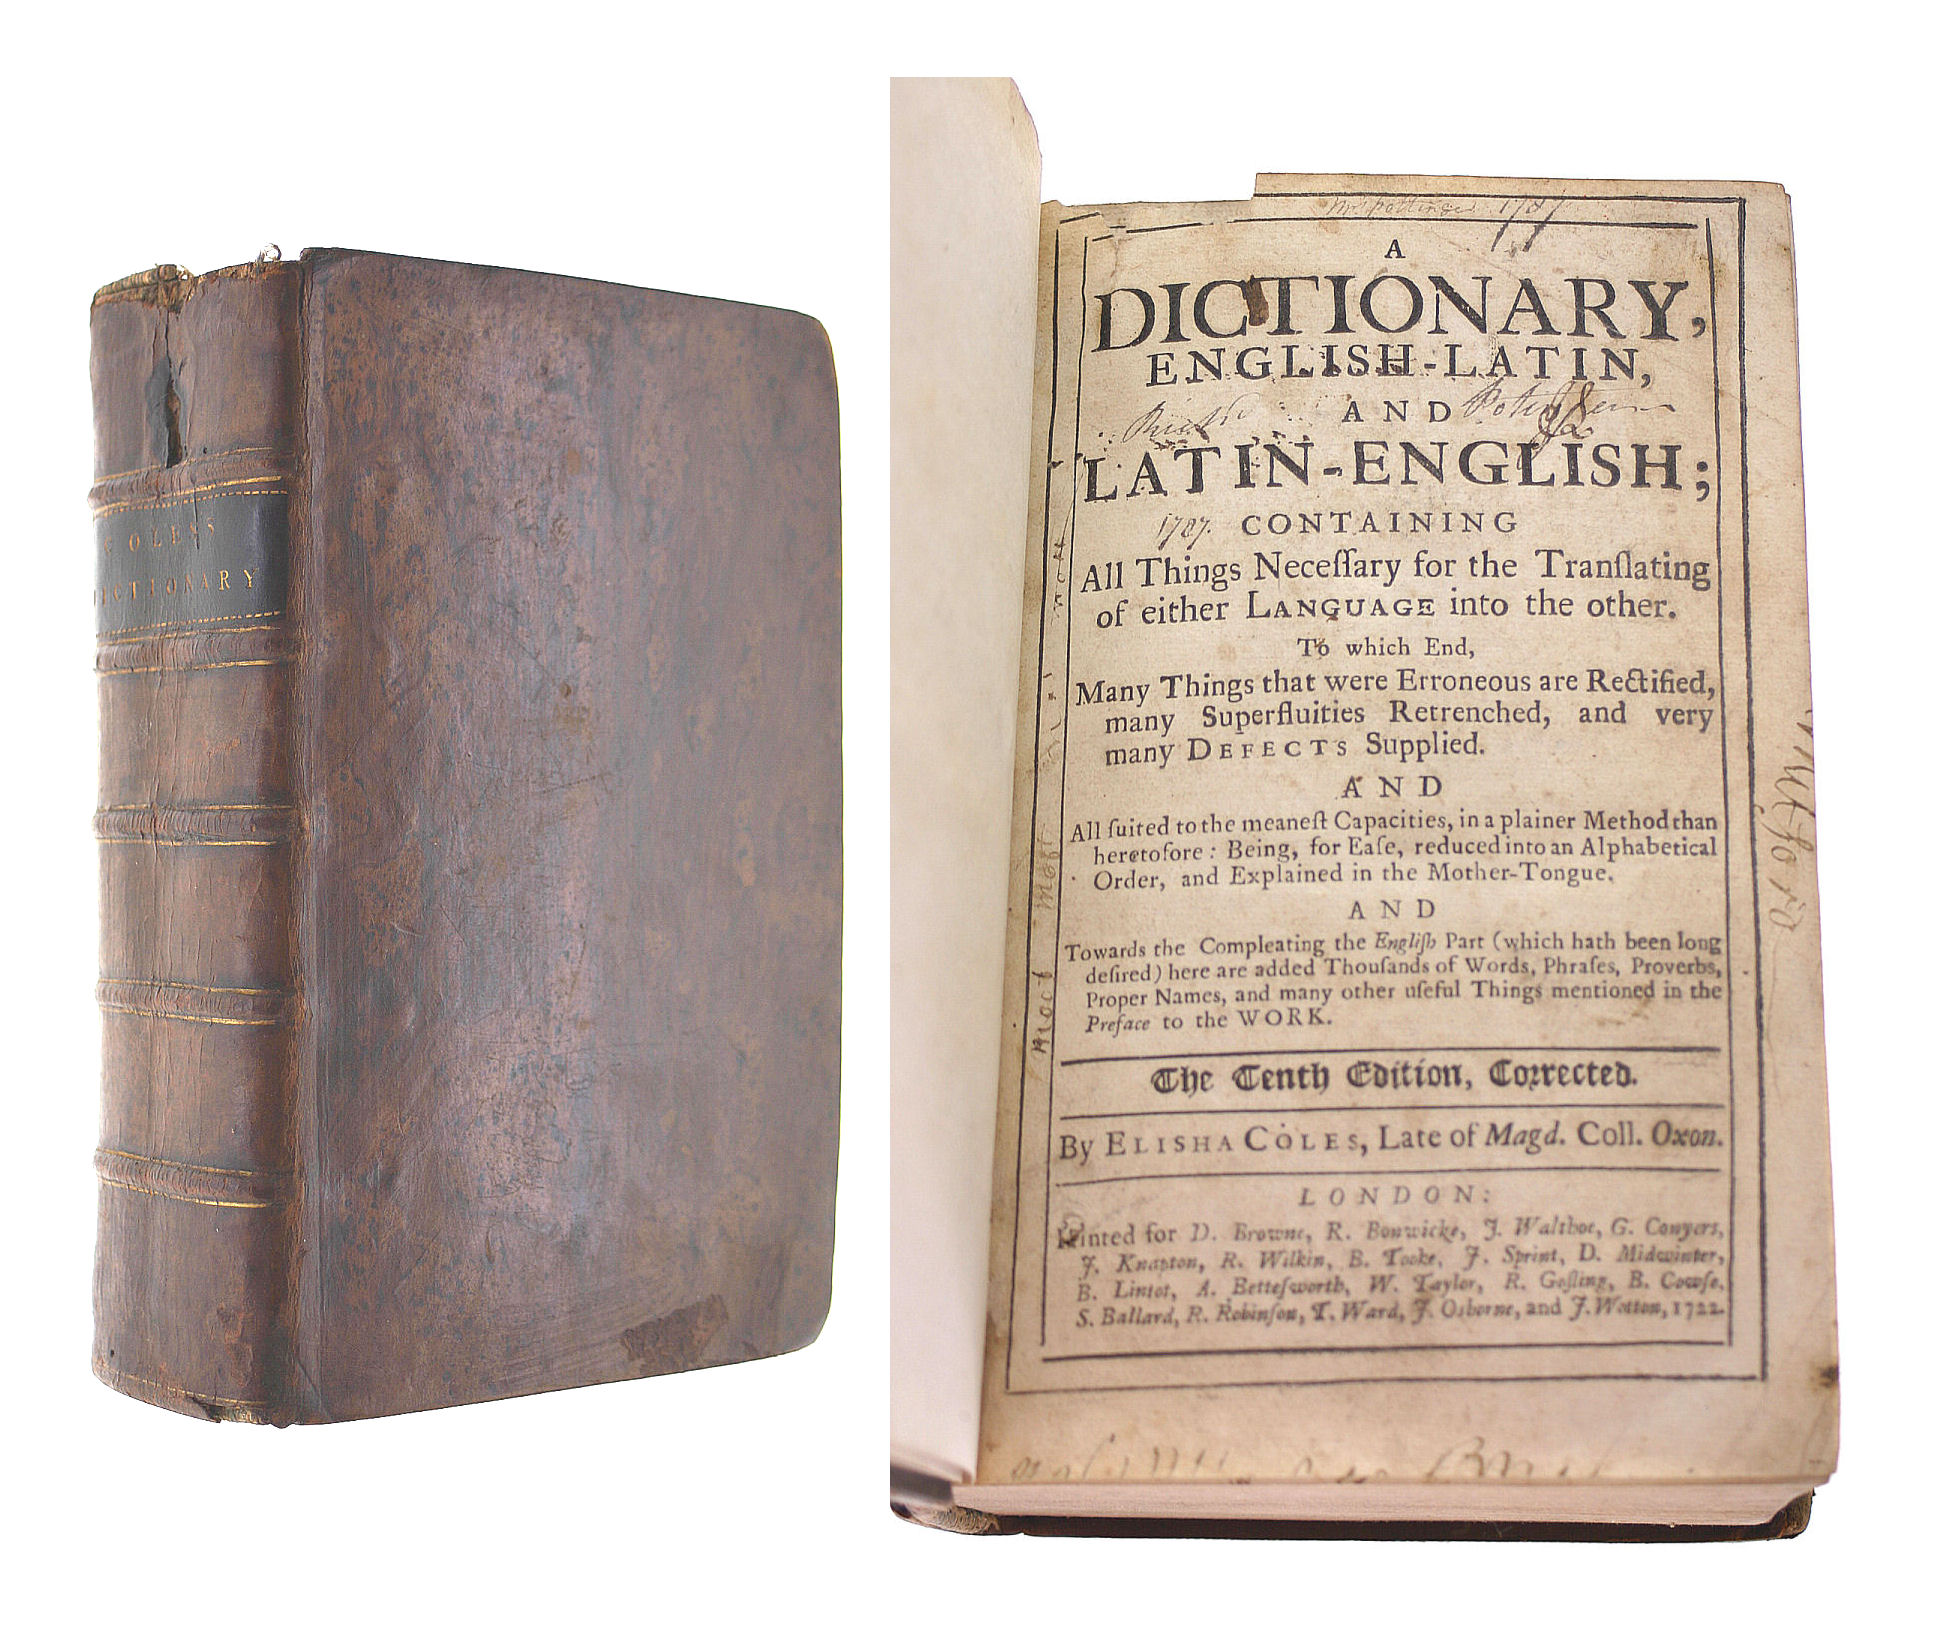 ELISHA COLES - A Dictionary, English-Latin and Latin-English Tenth Edition Corrected